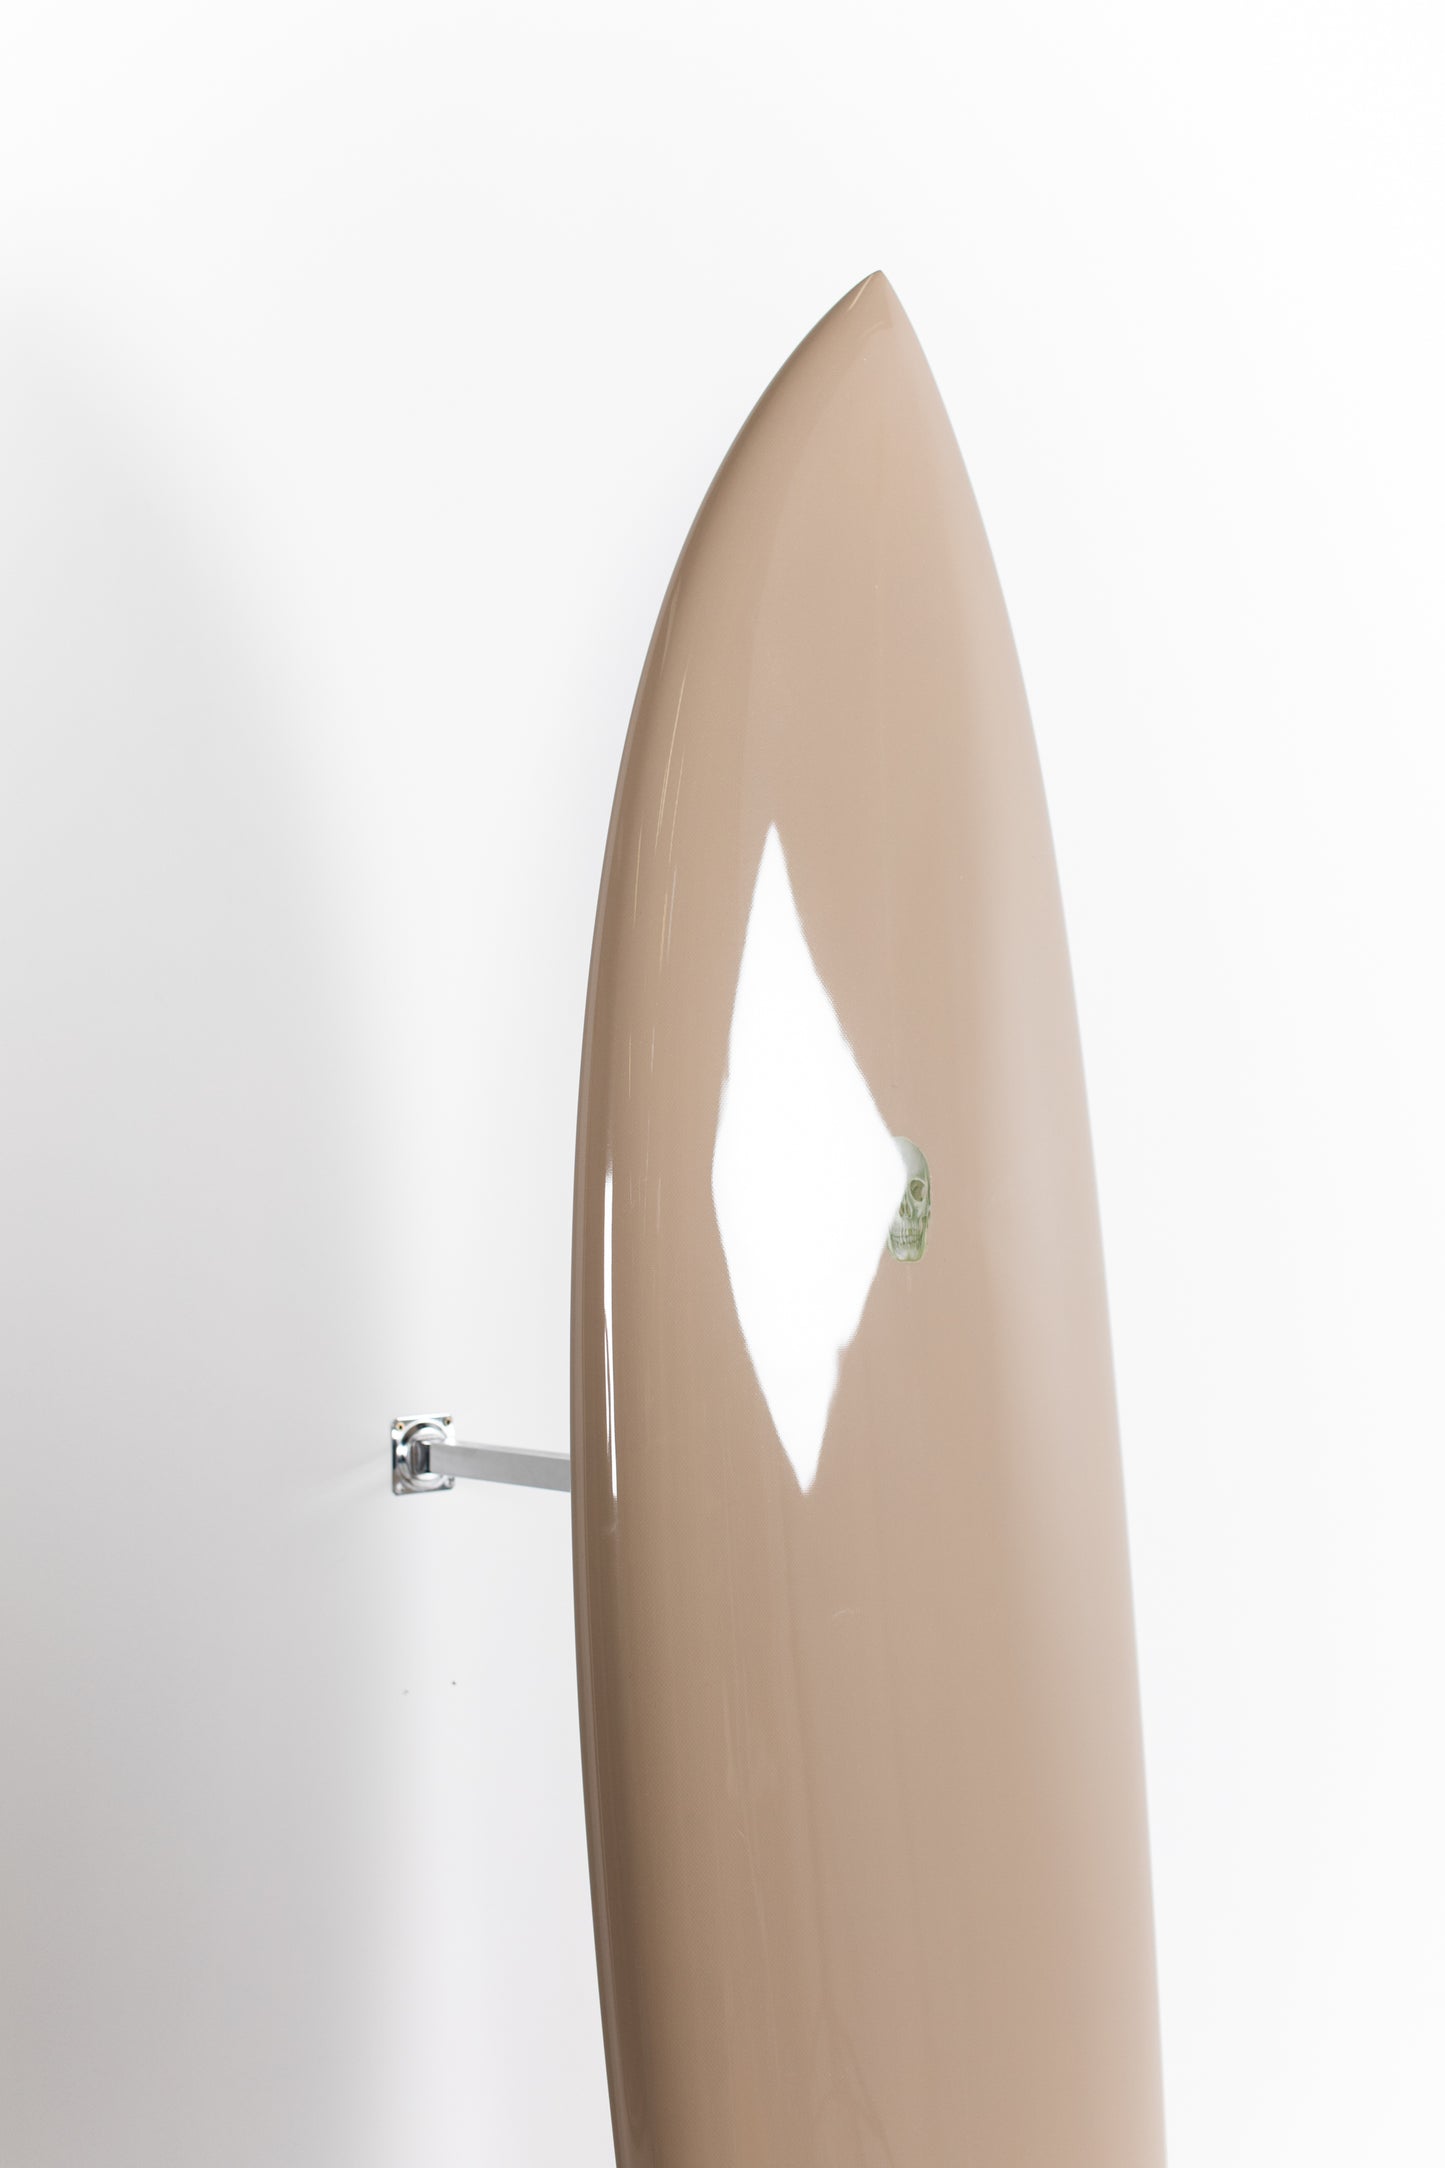 
                  
                    Pukas Surf Shop - Christenson Surfboards - LONG PHISH - 6'10" x 20 7/8 x 2 5/8 - CX04671
                  
                